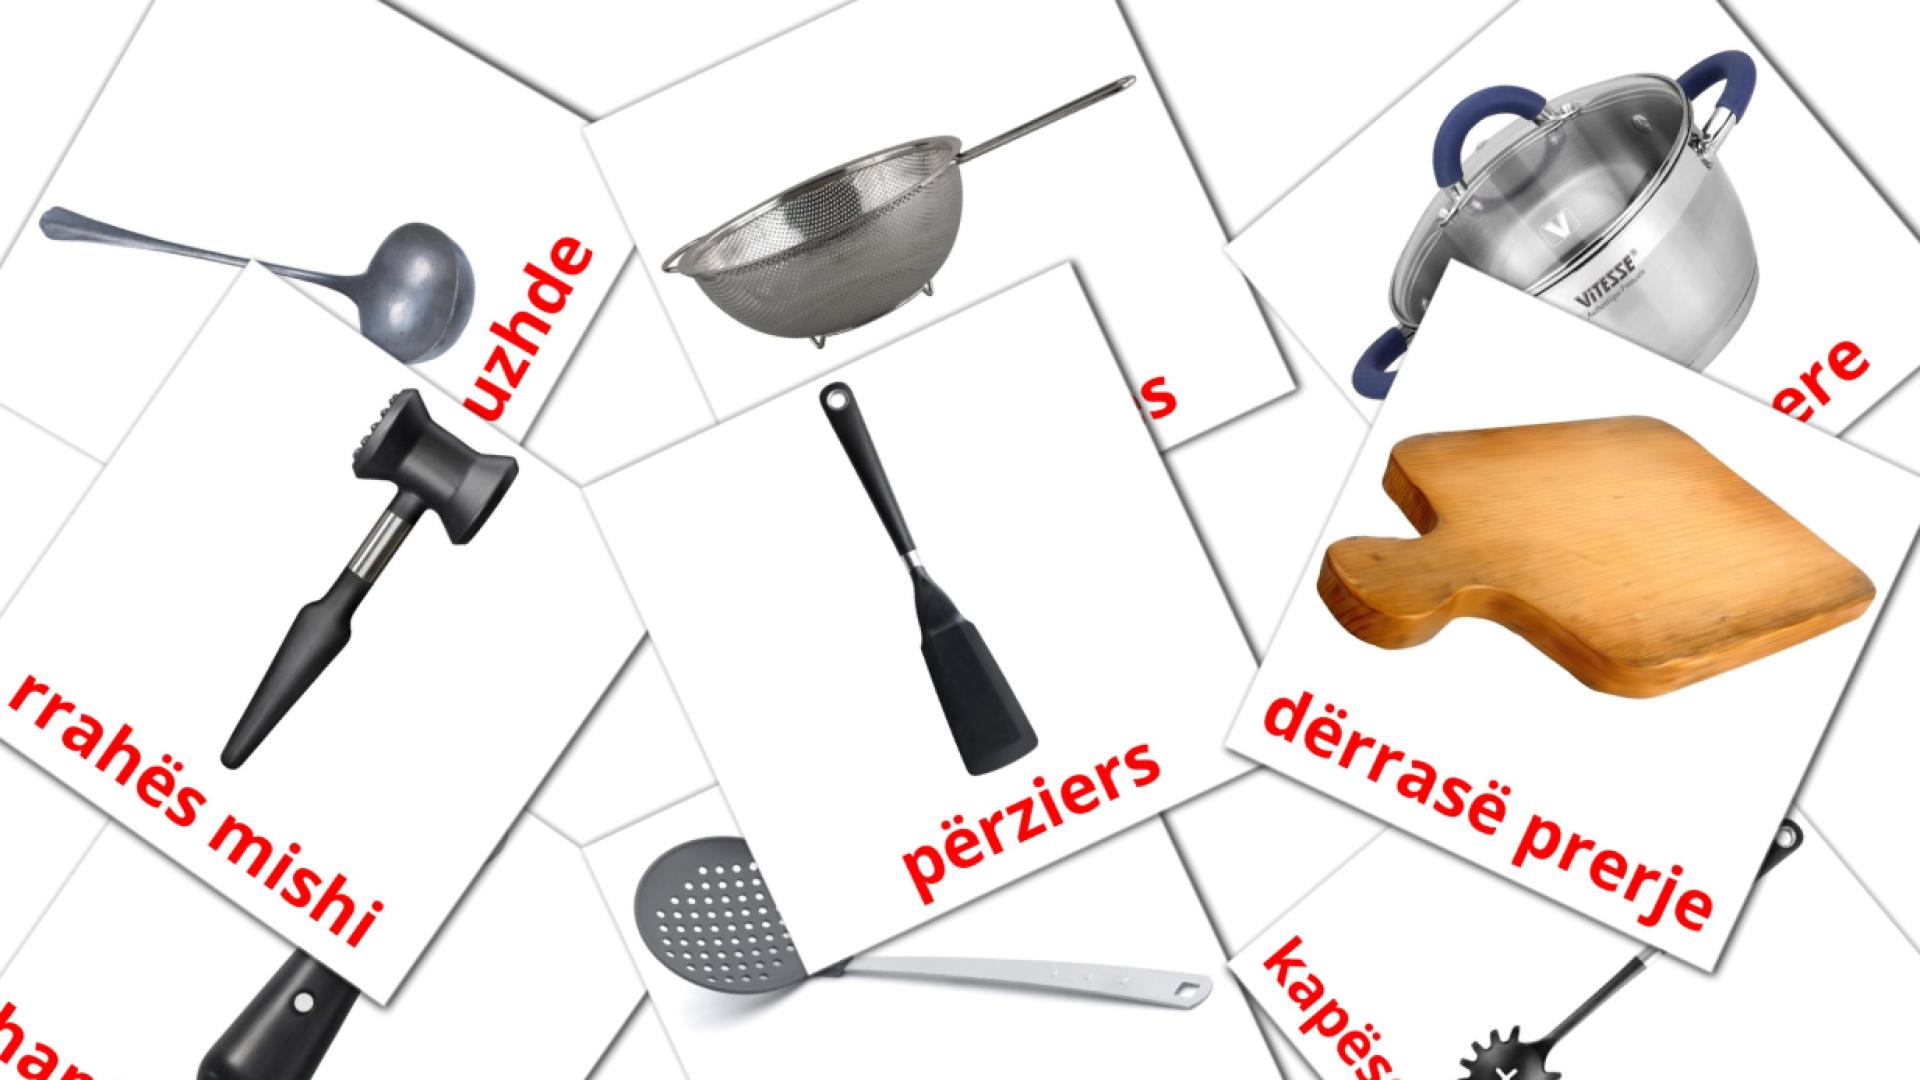 Kitchenware - albanian vocabulary cards